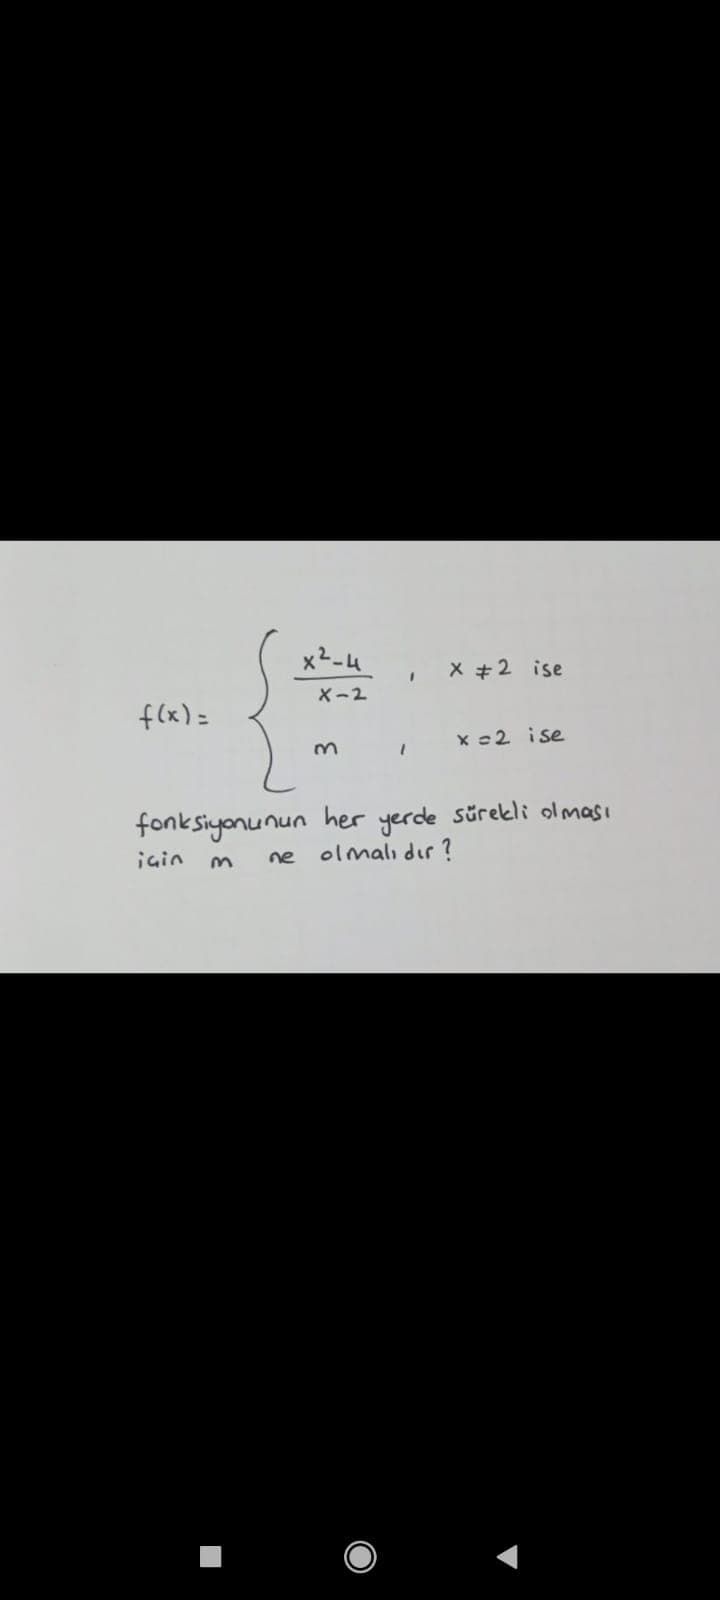 x2-4
X +2 ise
X-2
f(x) =
x c2 ise
fonksiyonunun her yerde sürekli olması
olmalı dır ?
igin
ne
